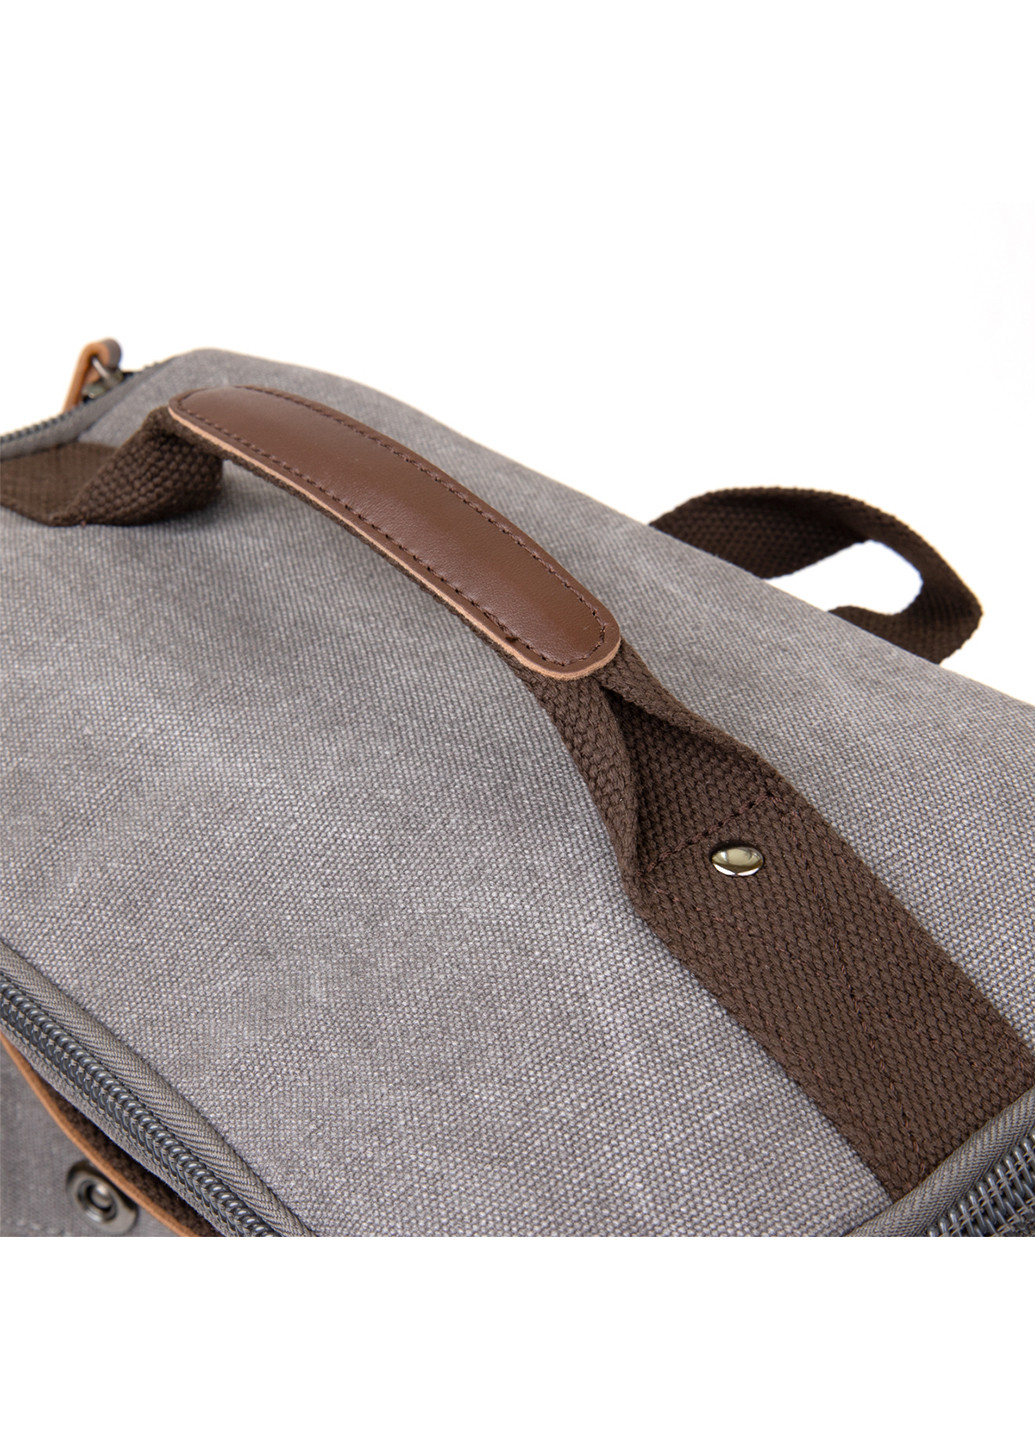 Текстильный рюкзак 30х45х16 см Vintage (242188197)